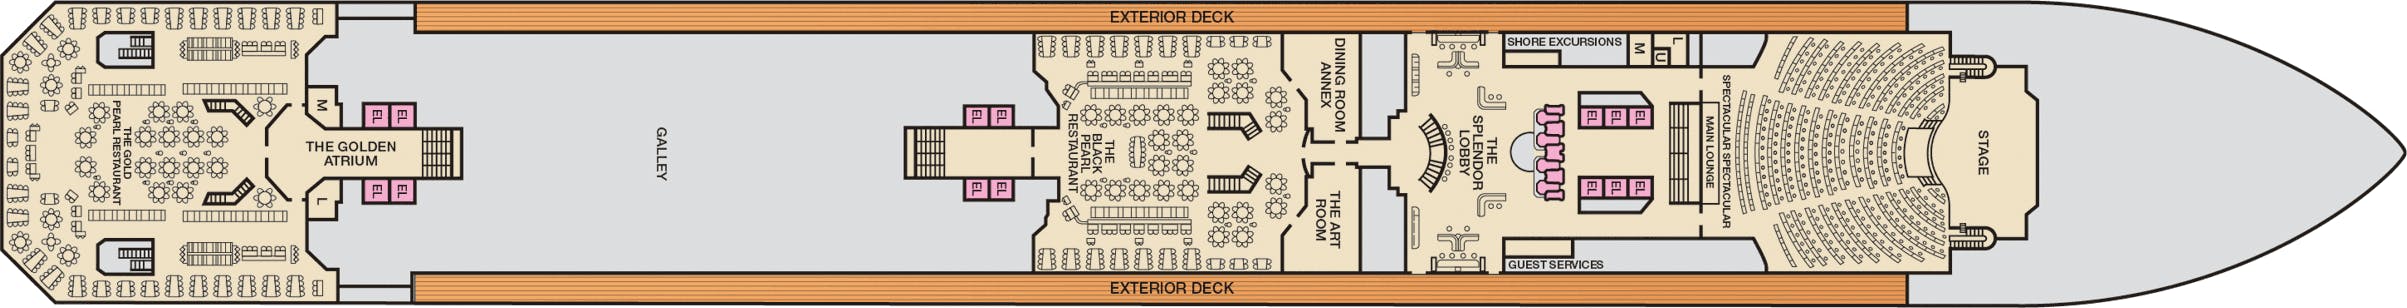 Carnival Splendor - Carnival Cruise Line - Deck 3 (Lobby)